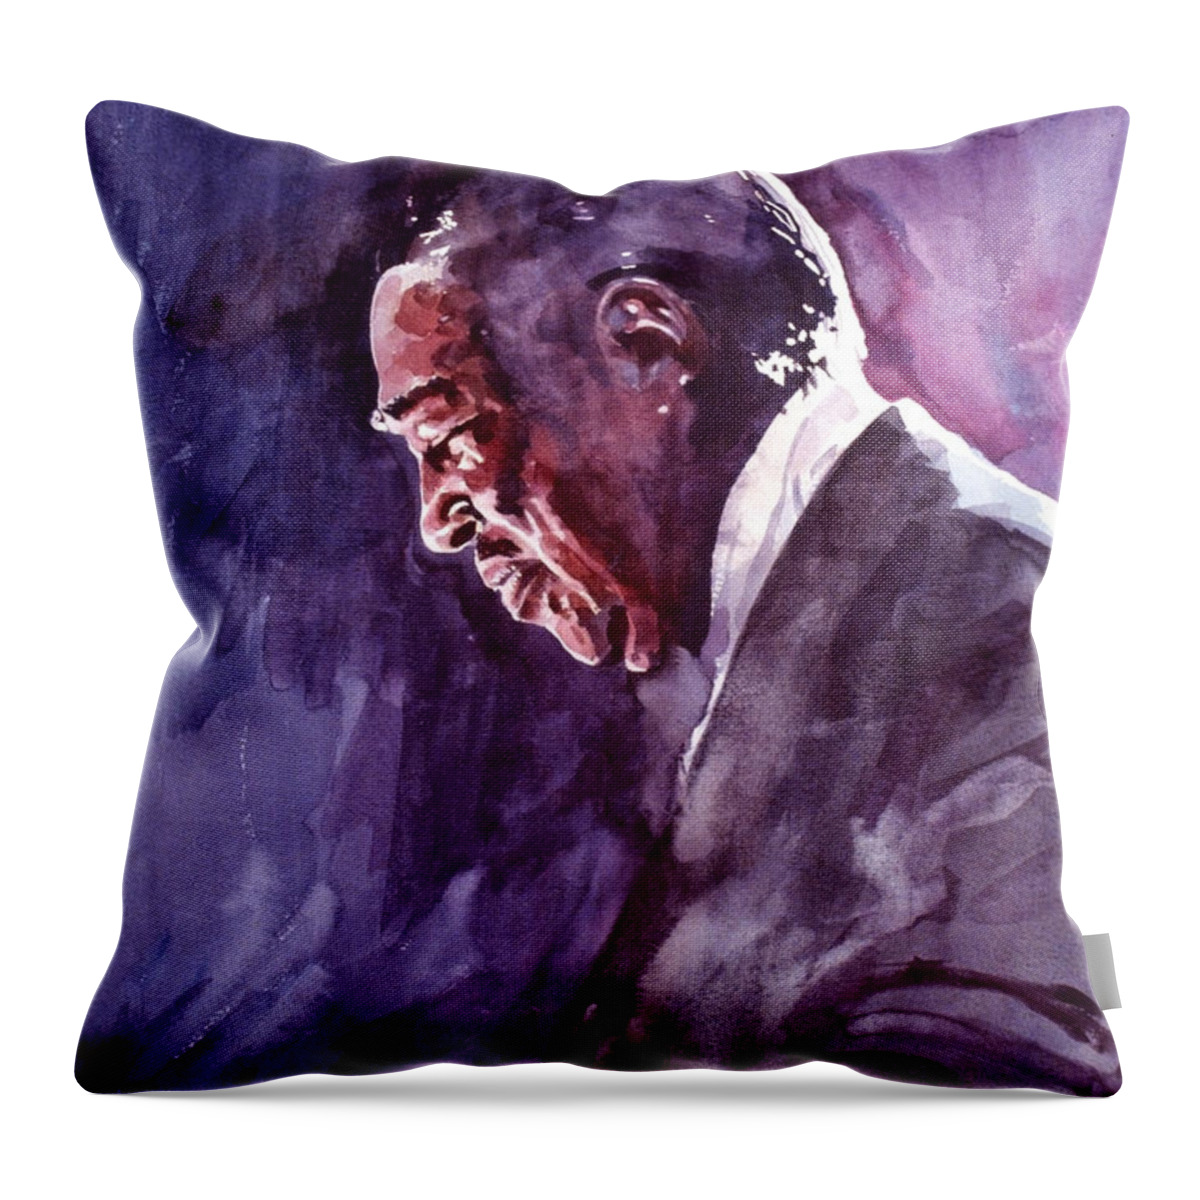 Duke Ellington Throw Pillow featuring the painting Duke Ellington Mood Indigo Sounds by David Lloyd Glover